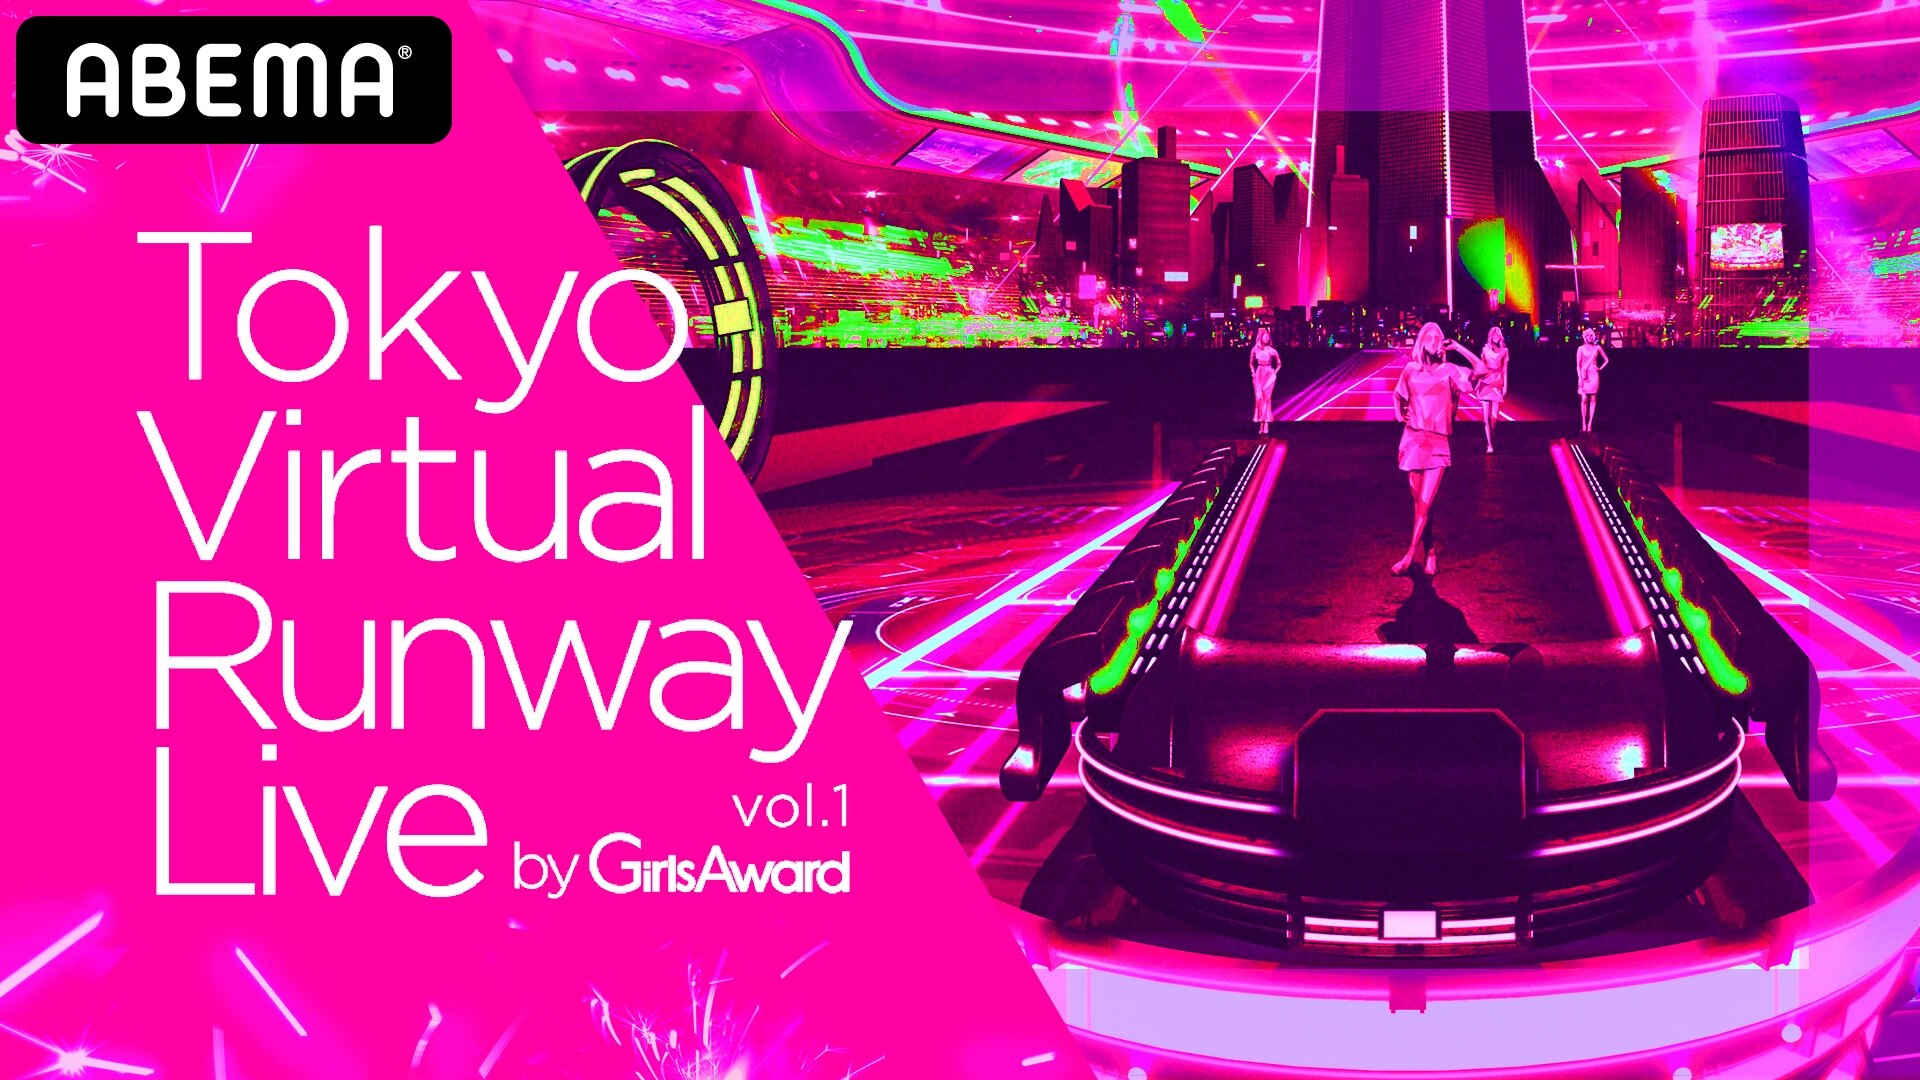 News 6月27日 土 に開催される Tokyo Virtual Runway Live By